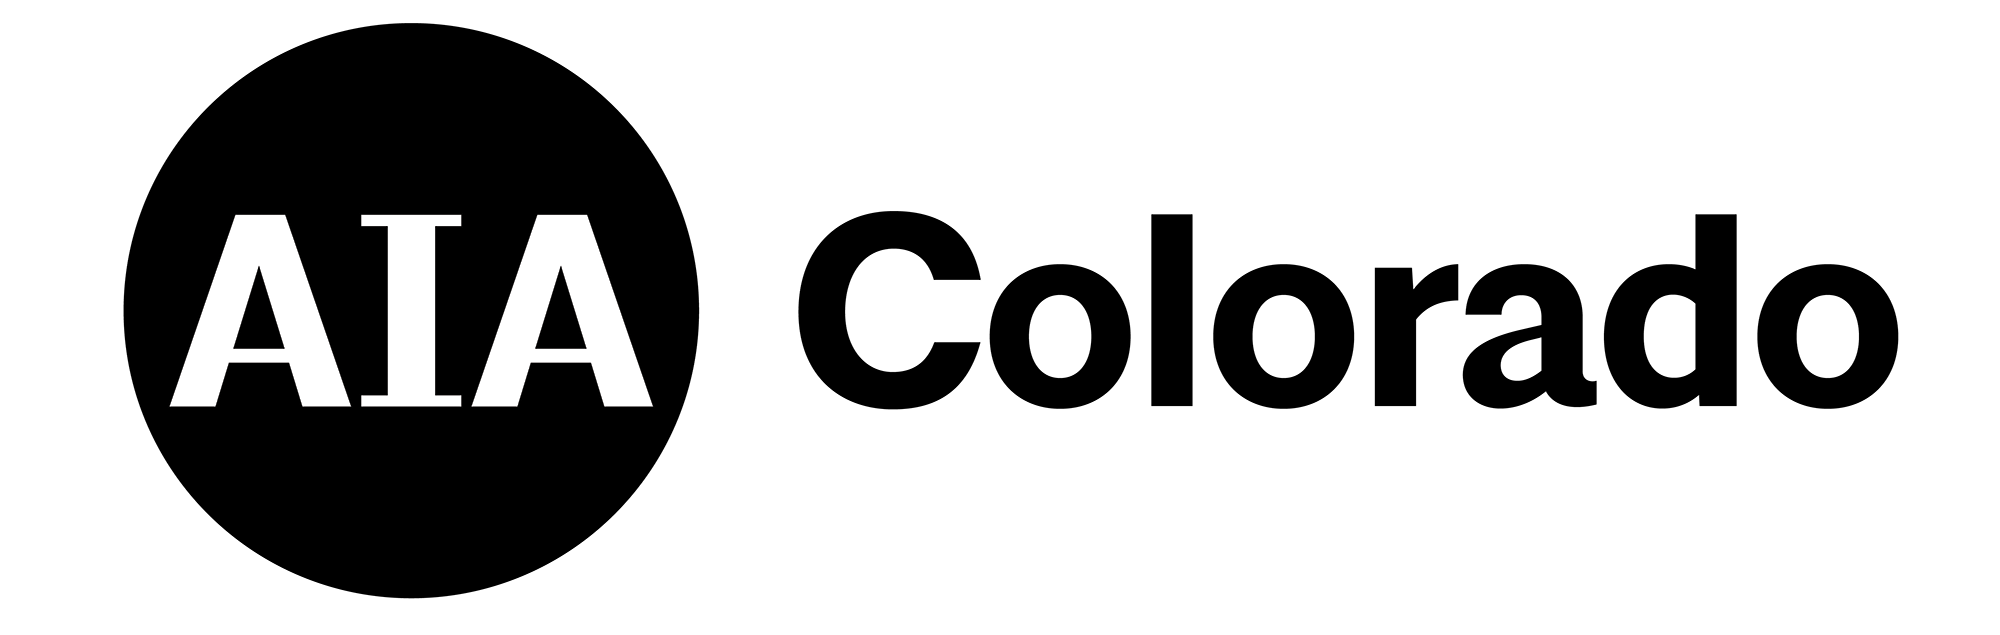 AIA Colorado logo.png